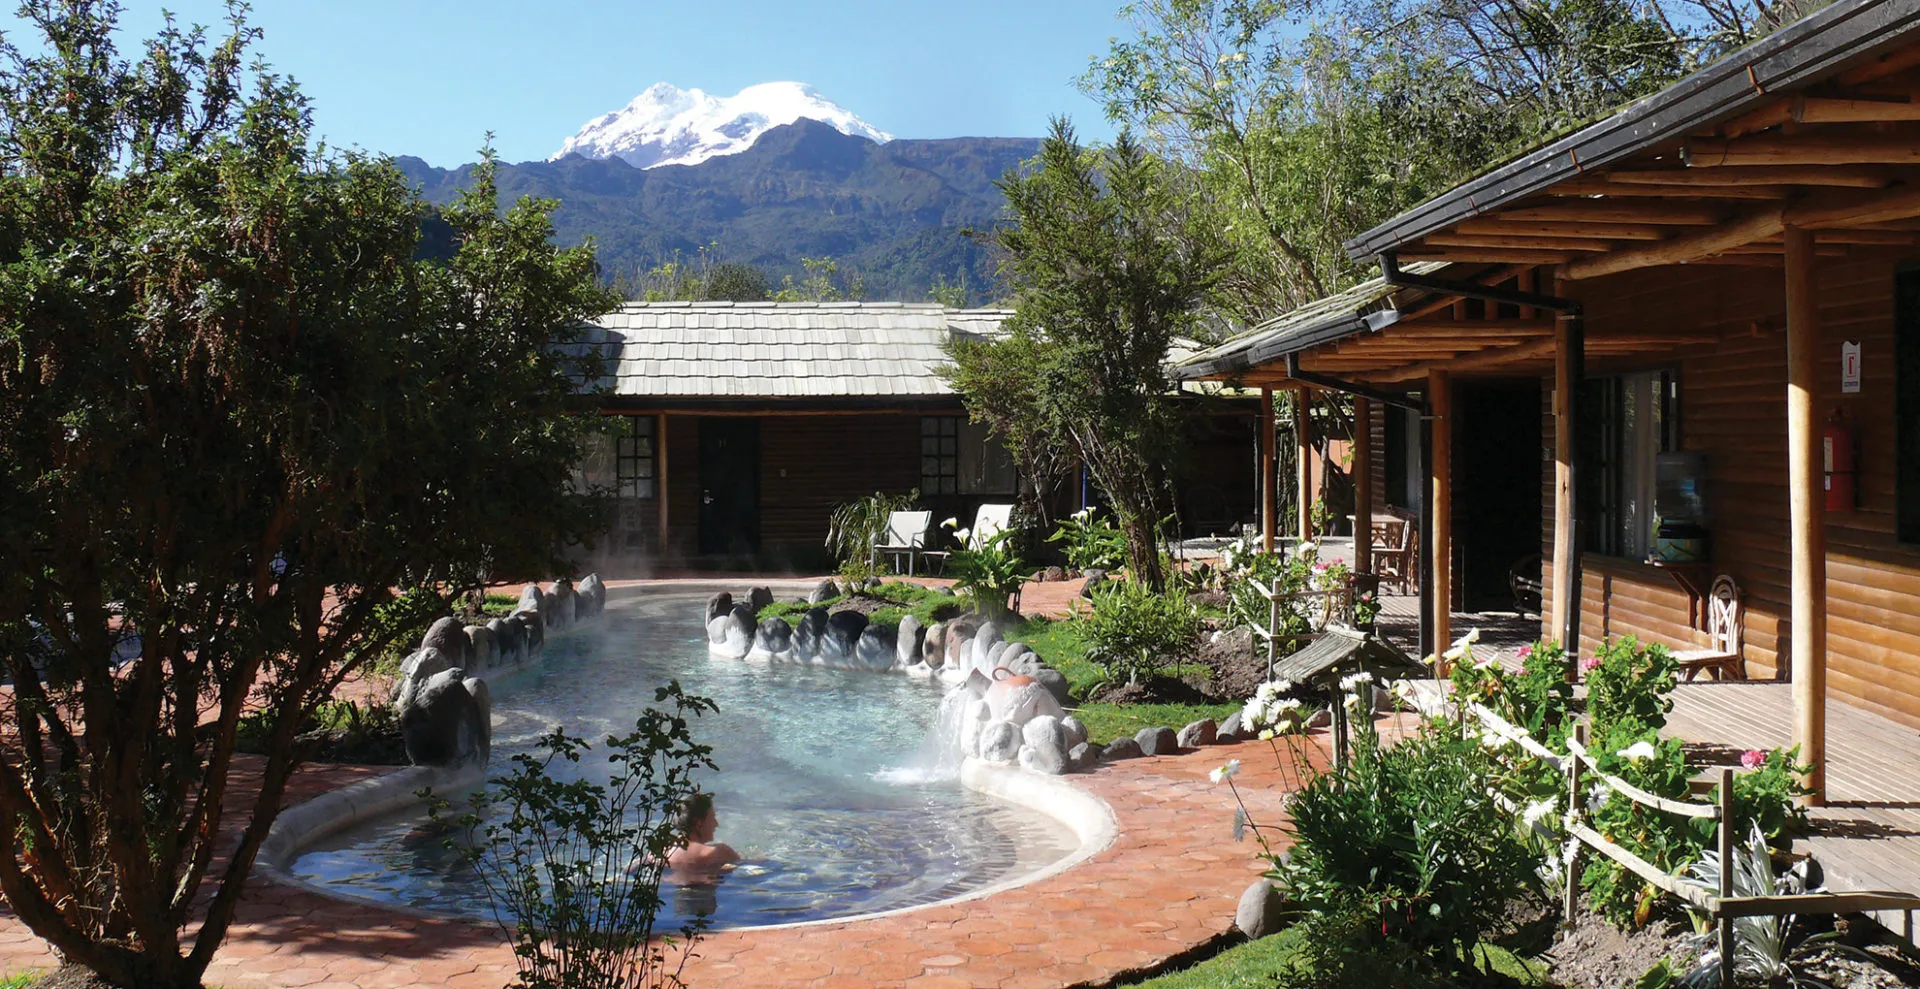 Papallacta Hot Springs in Ecuador, South America | Hot Springs & Pools - Rated 4.9